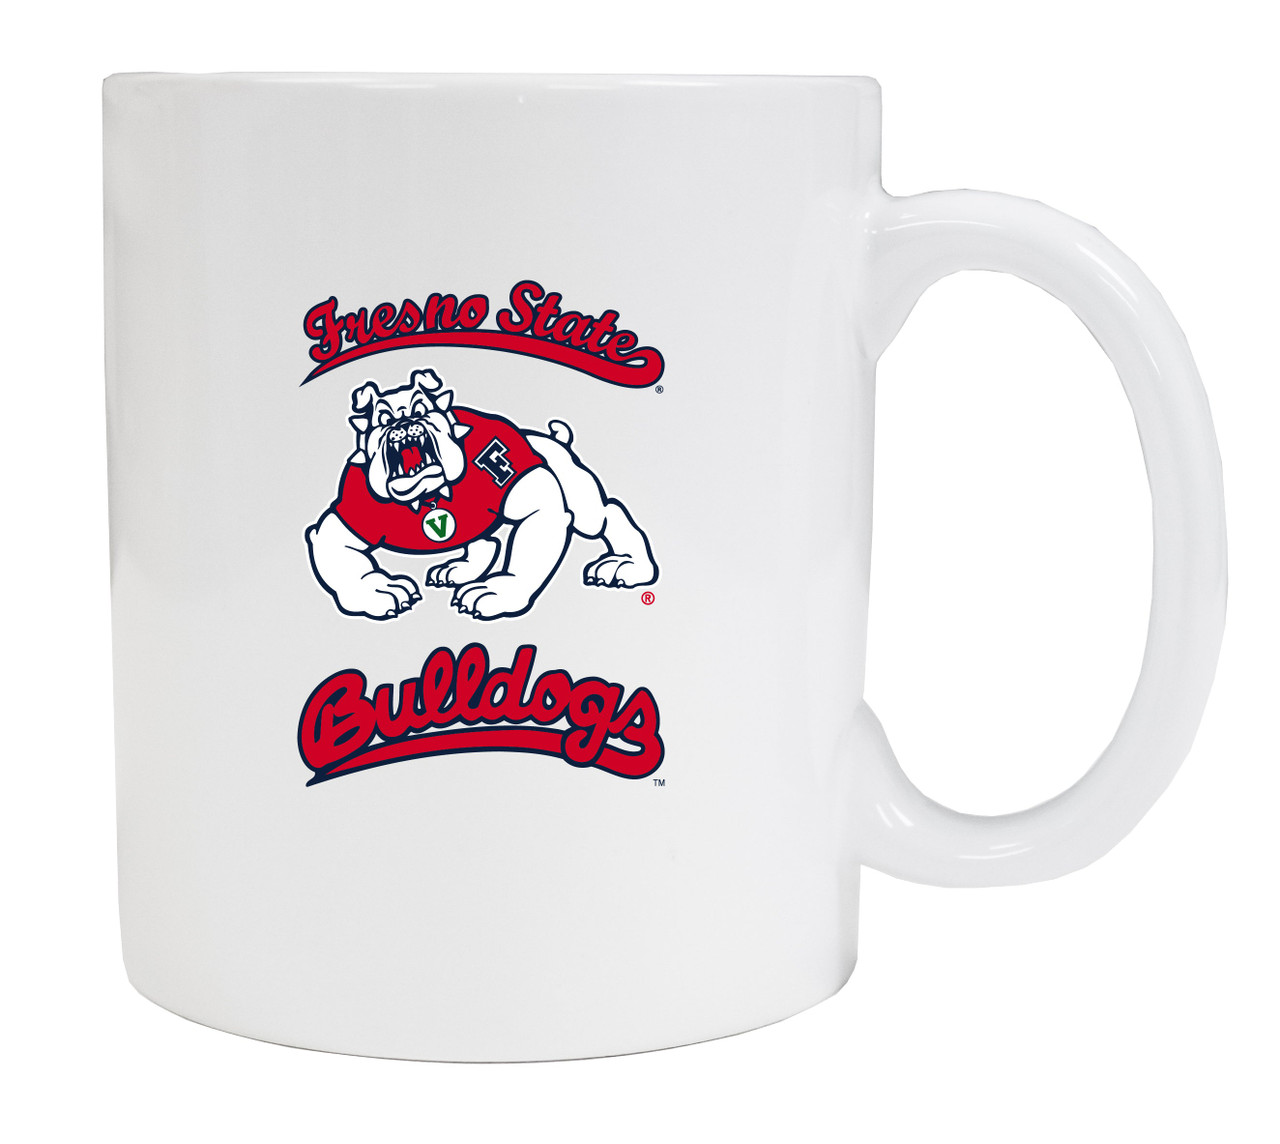 Fresno State Bulldogs White Ceramic Mug (White).